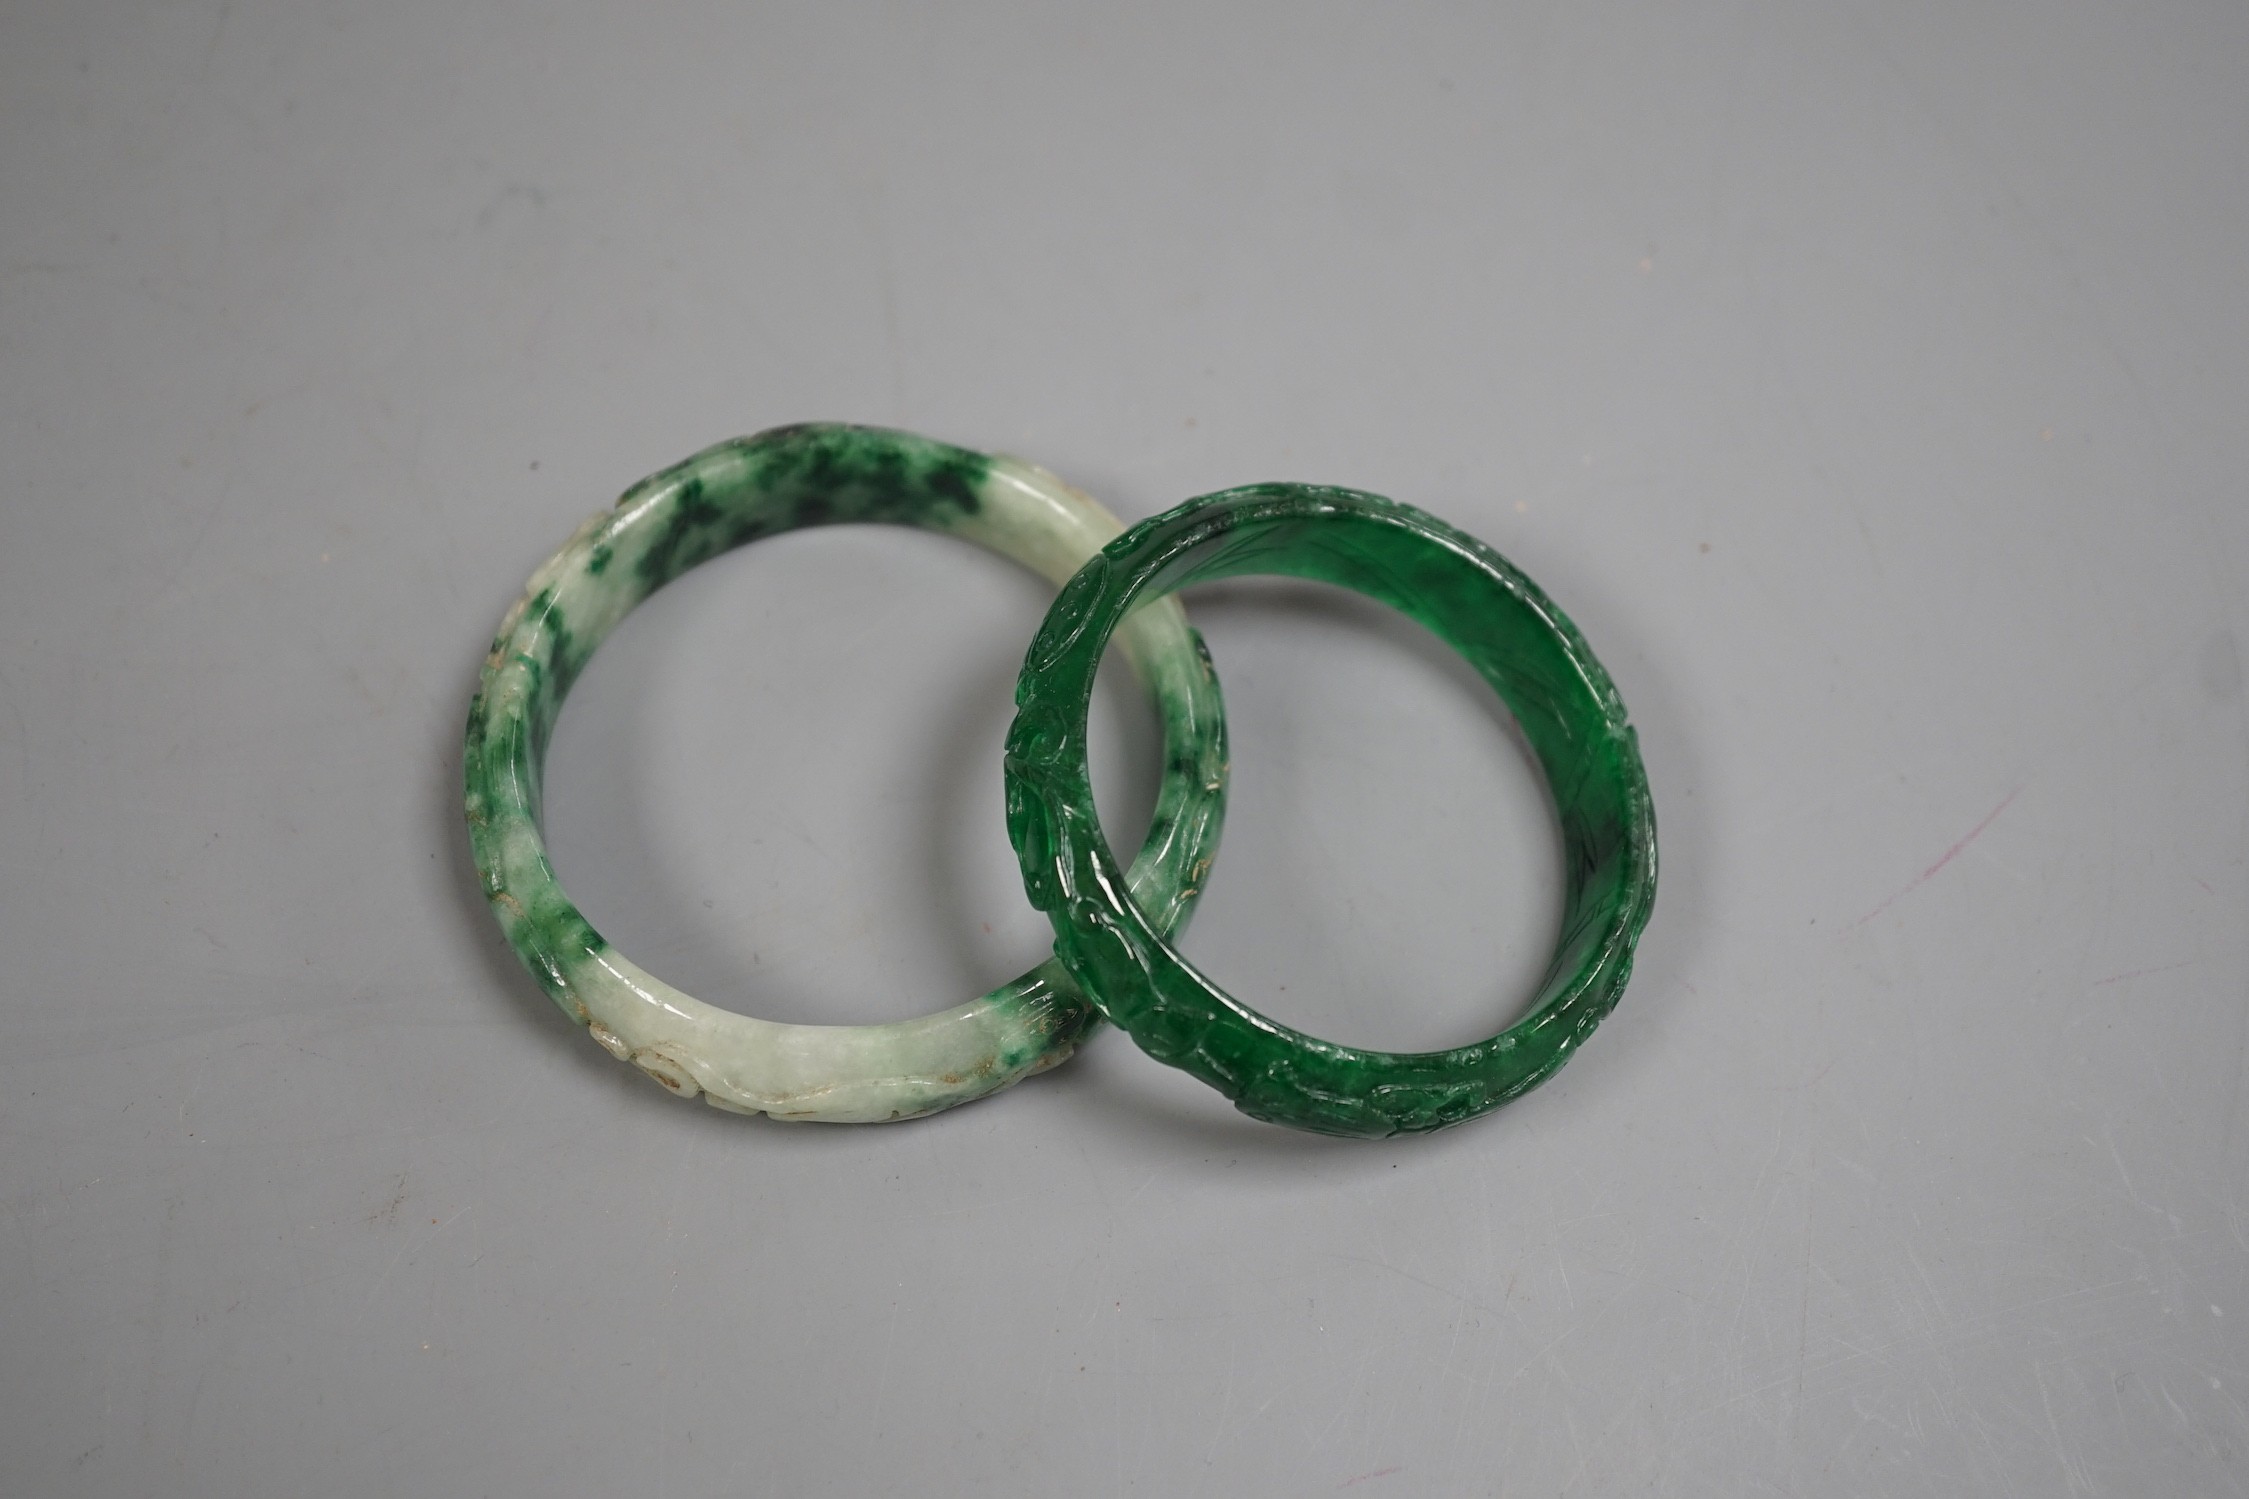 Two Chinese jadeite bangles - Image 2 of 3